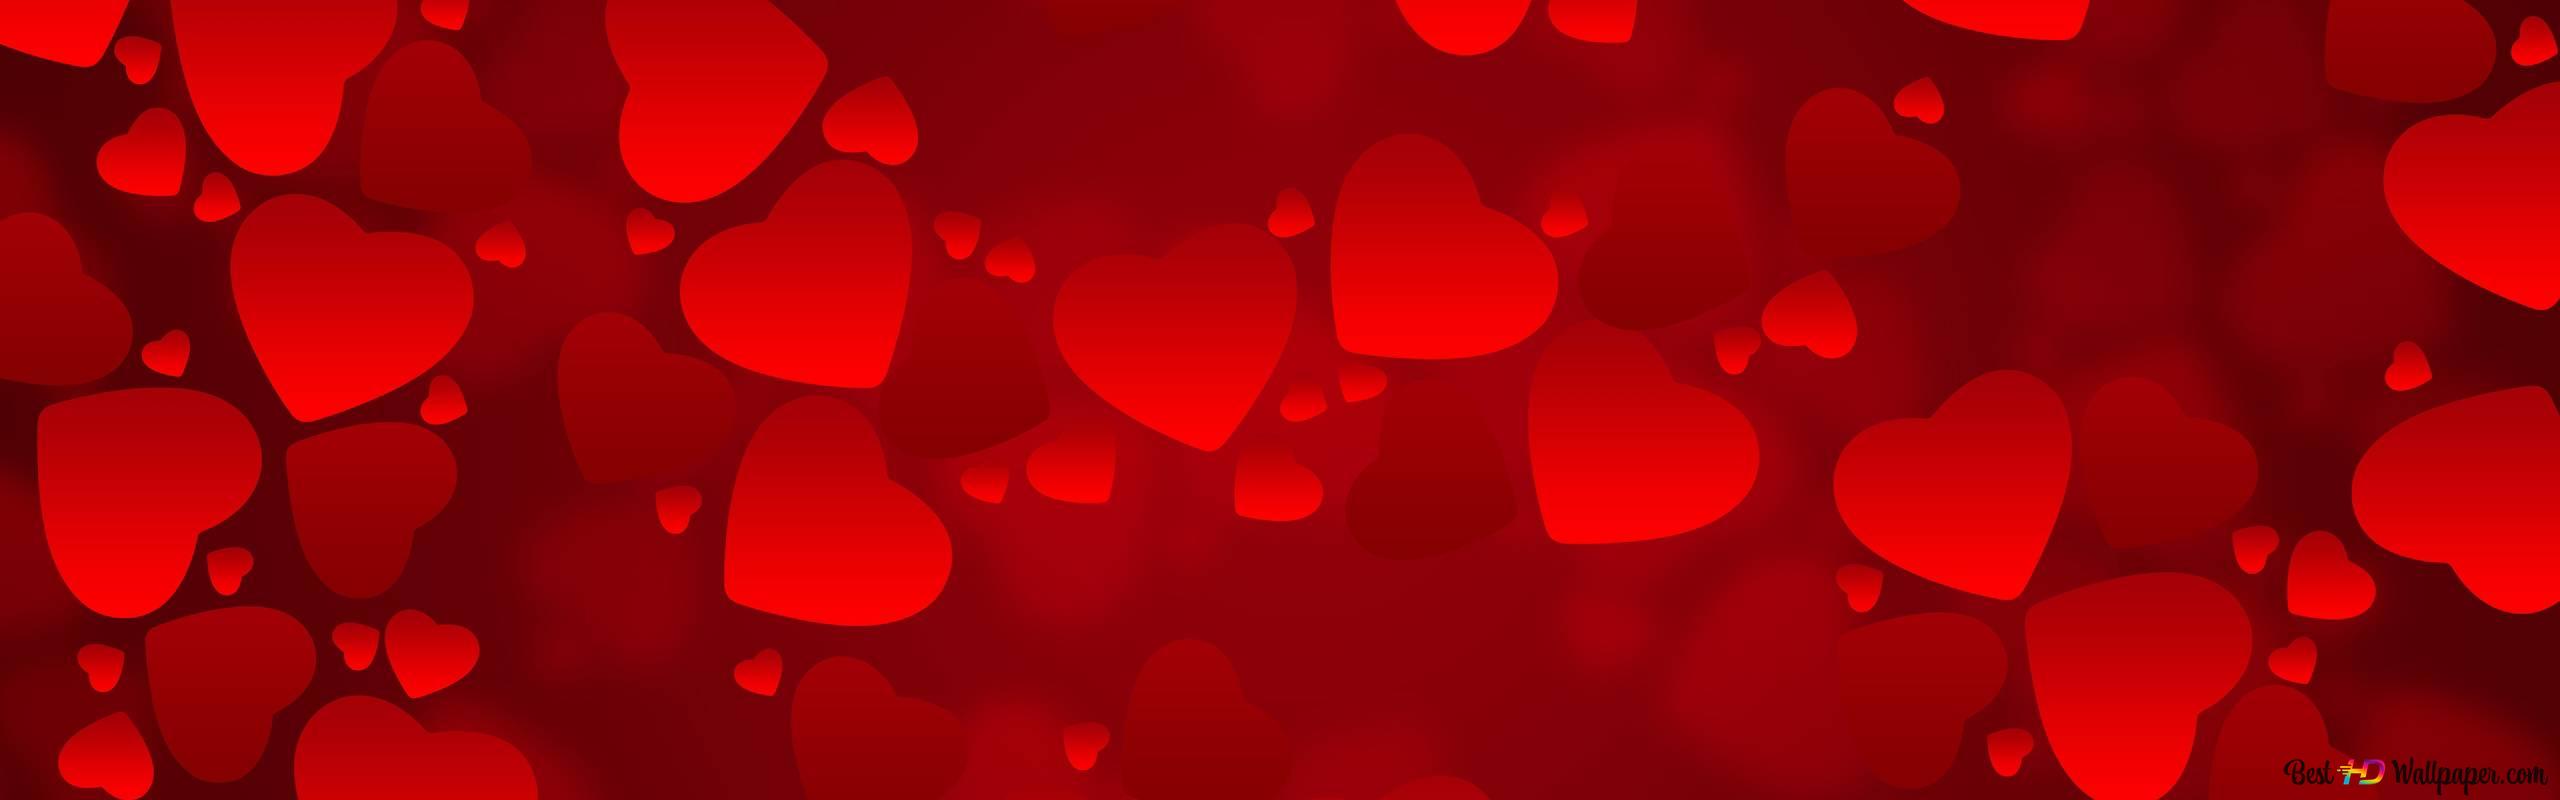 Valentine's day red hearts background 2K wallpaper download